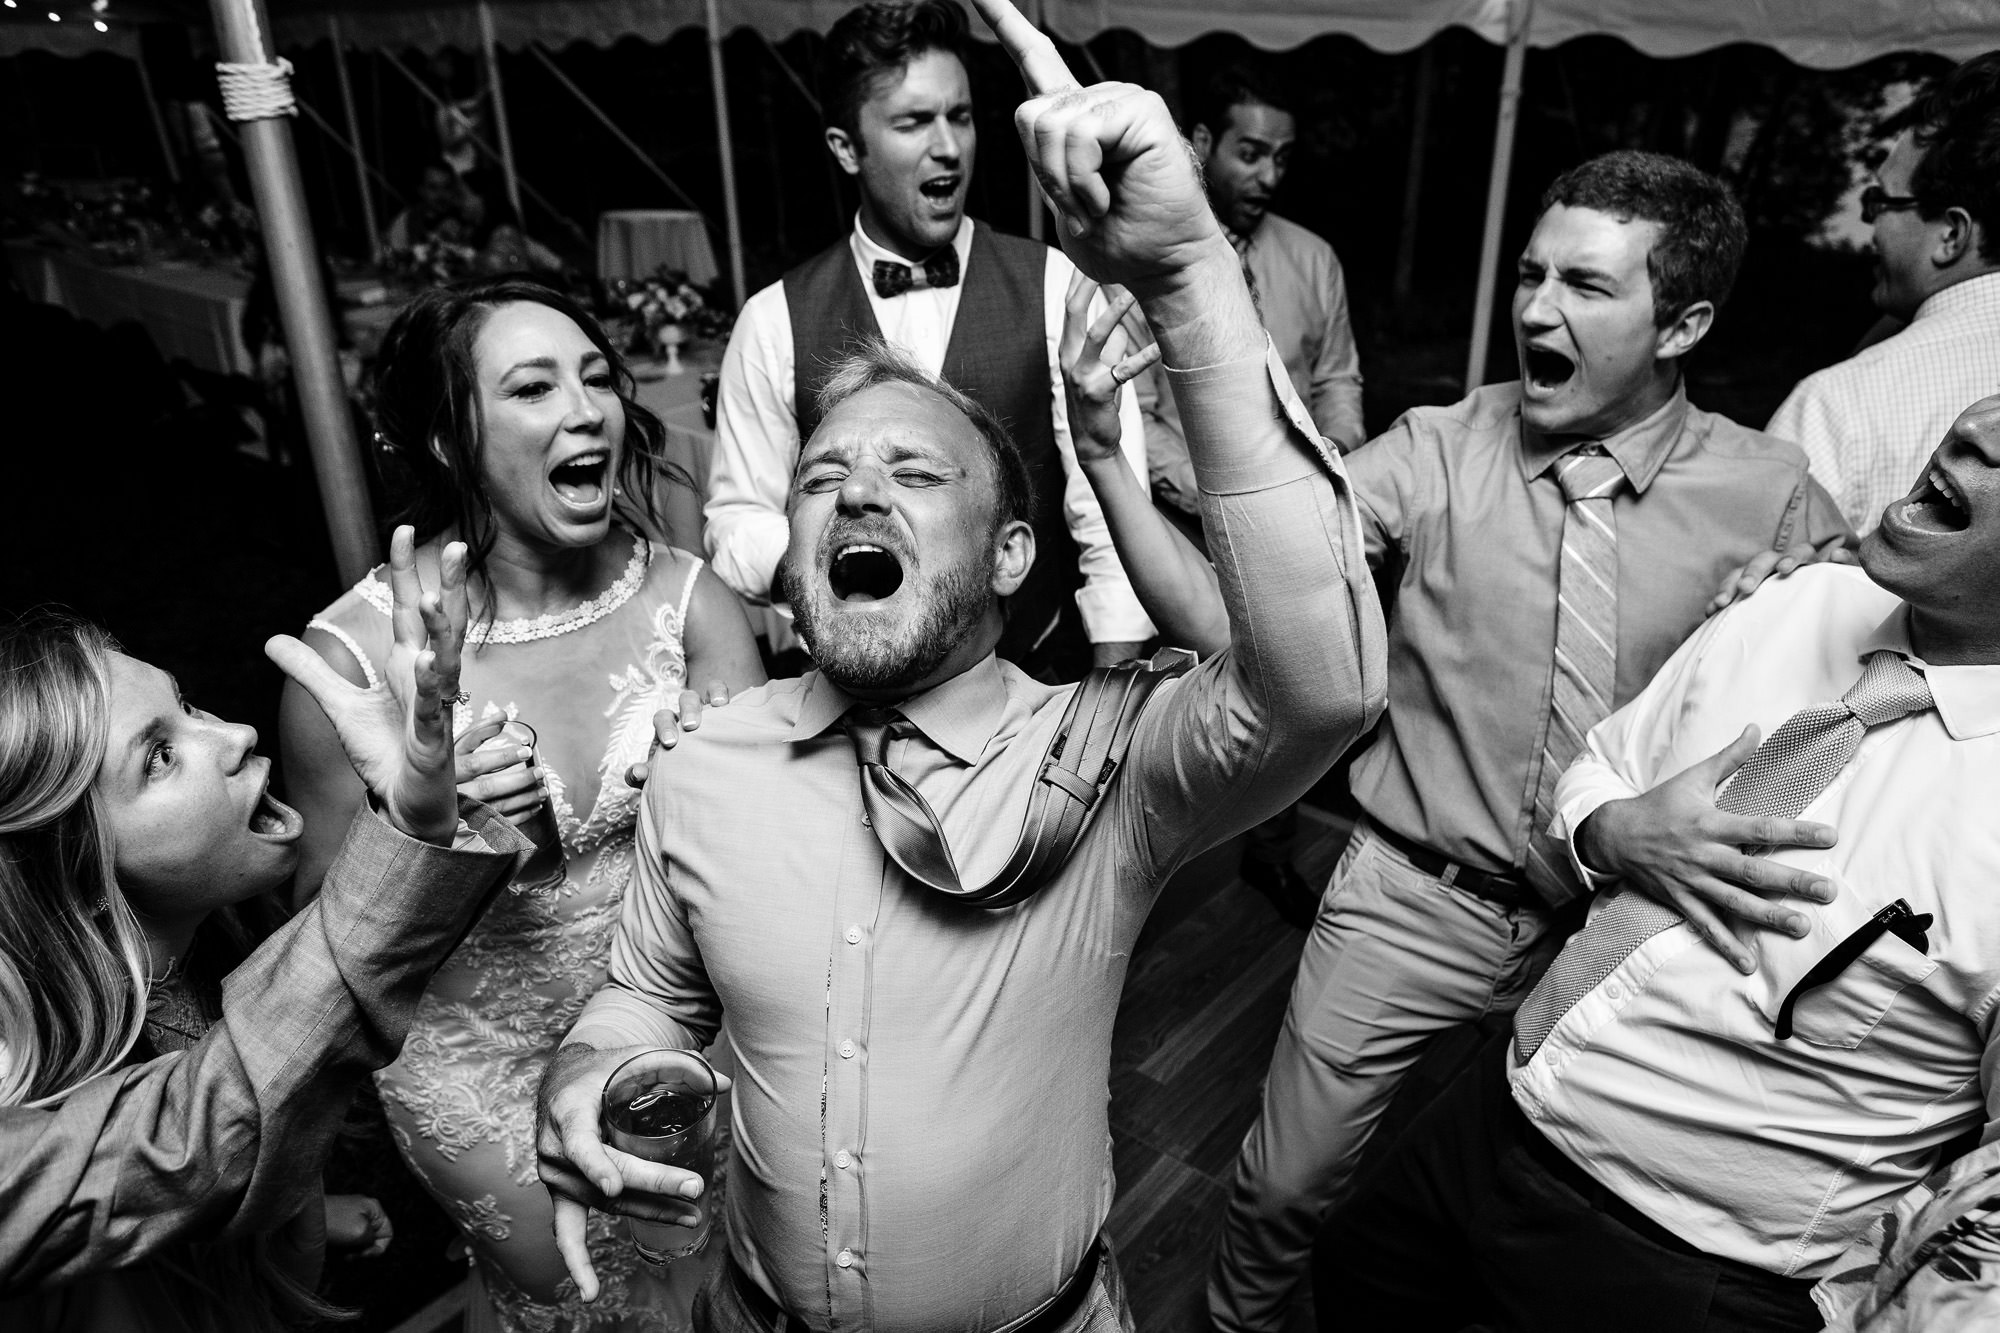 A documentary photo of an energetic Maine wedding dance floor.